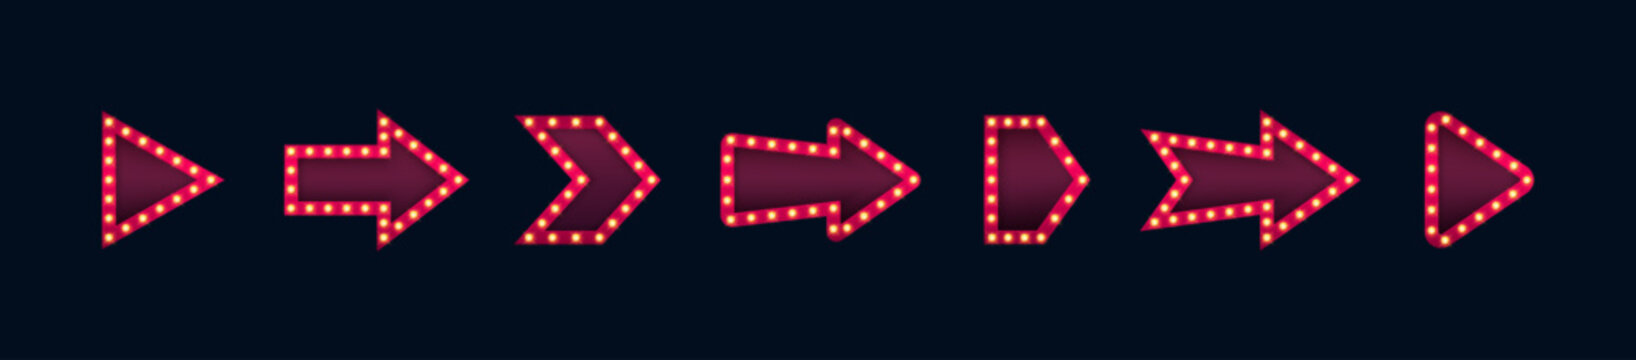 Set of retro lightbox in arrow shape on dark background. Arrow design for pointer, direction, orientation and navigation. Vector illustration